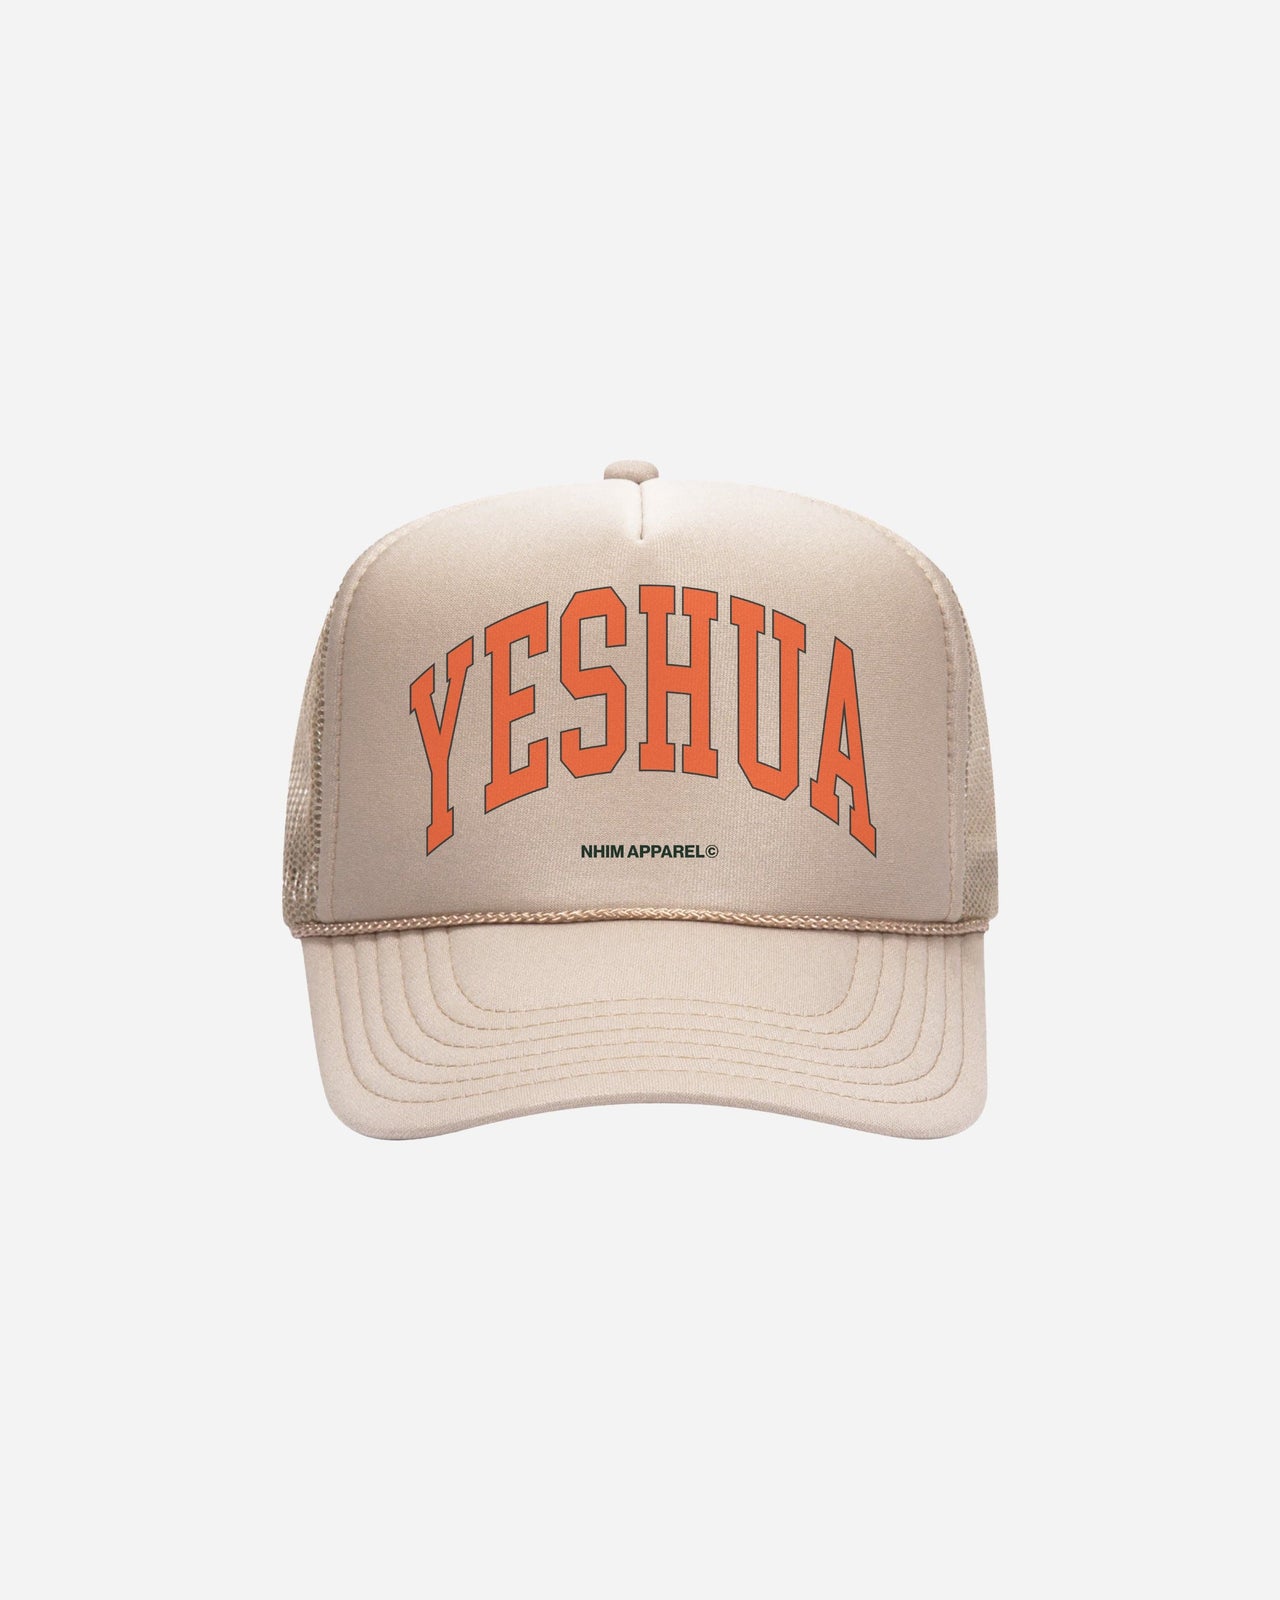 YESHUA Christian trucker hat from NHIM Apparel Christian Clothing Brand, khaki hat with orange writing